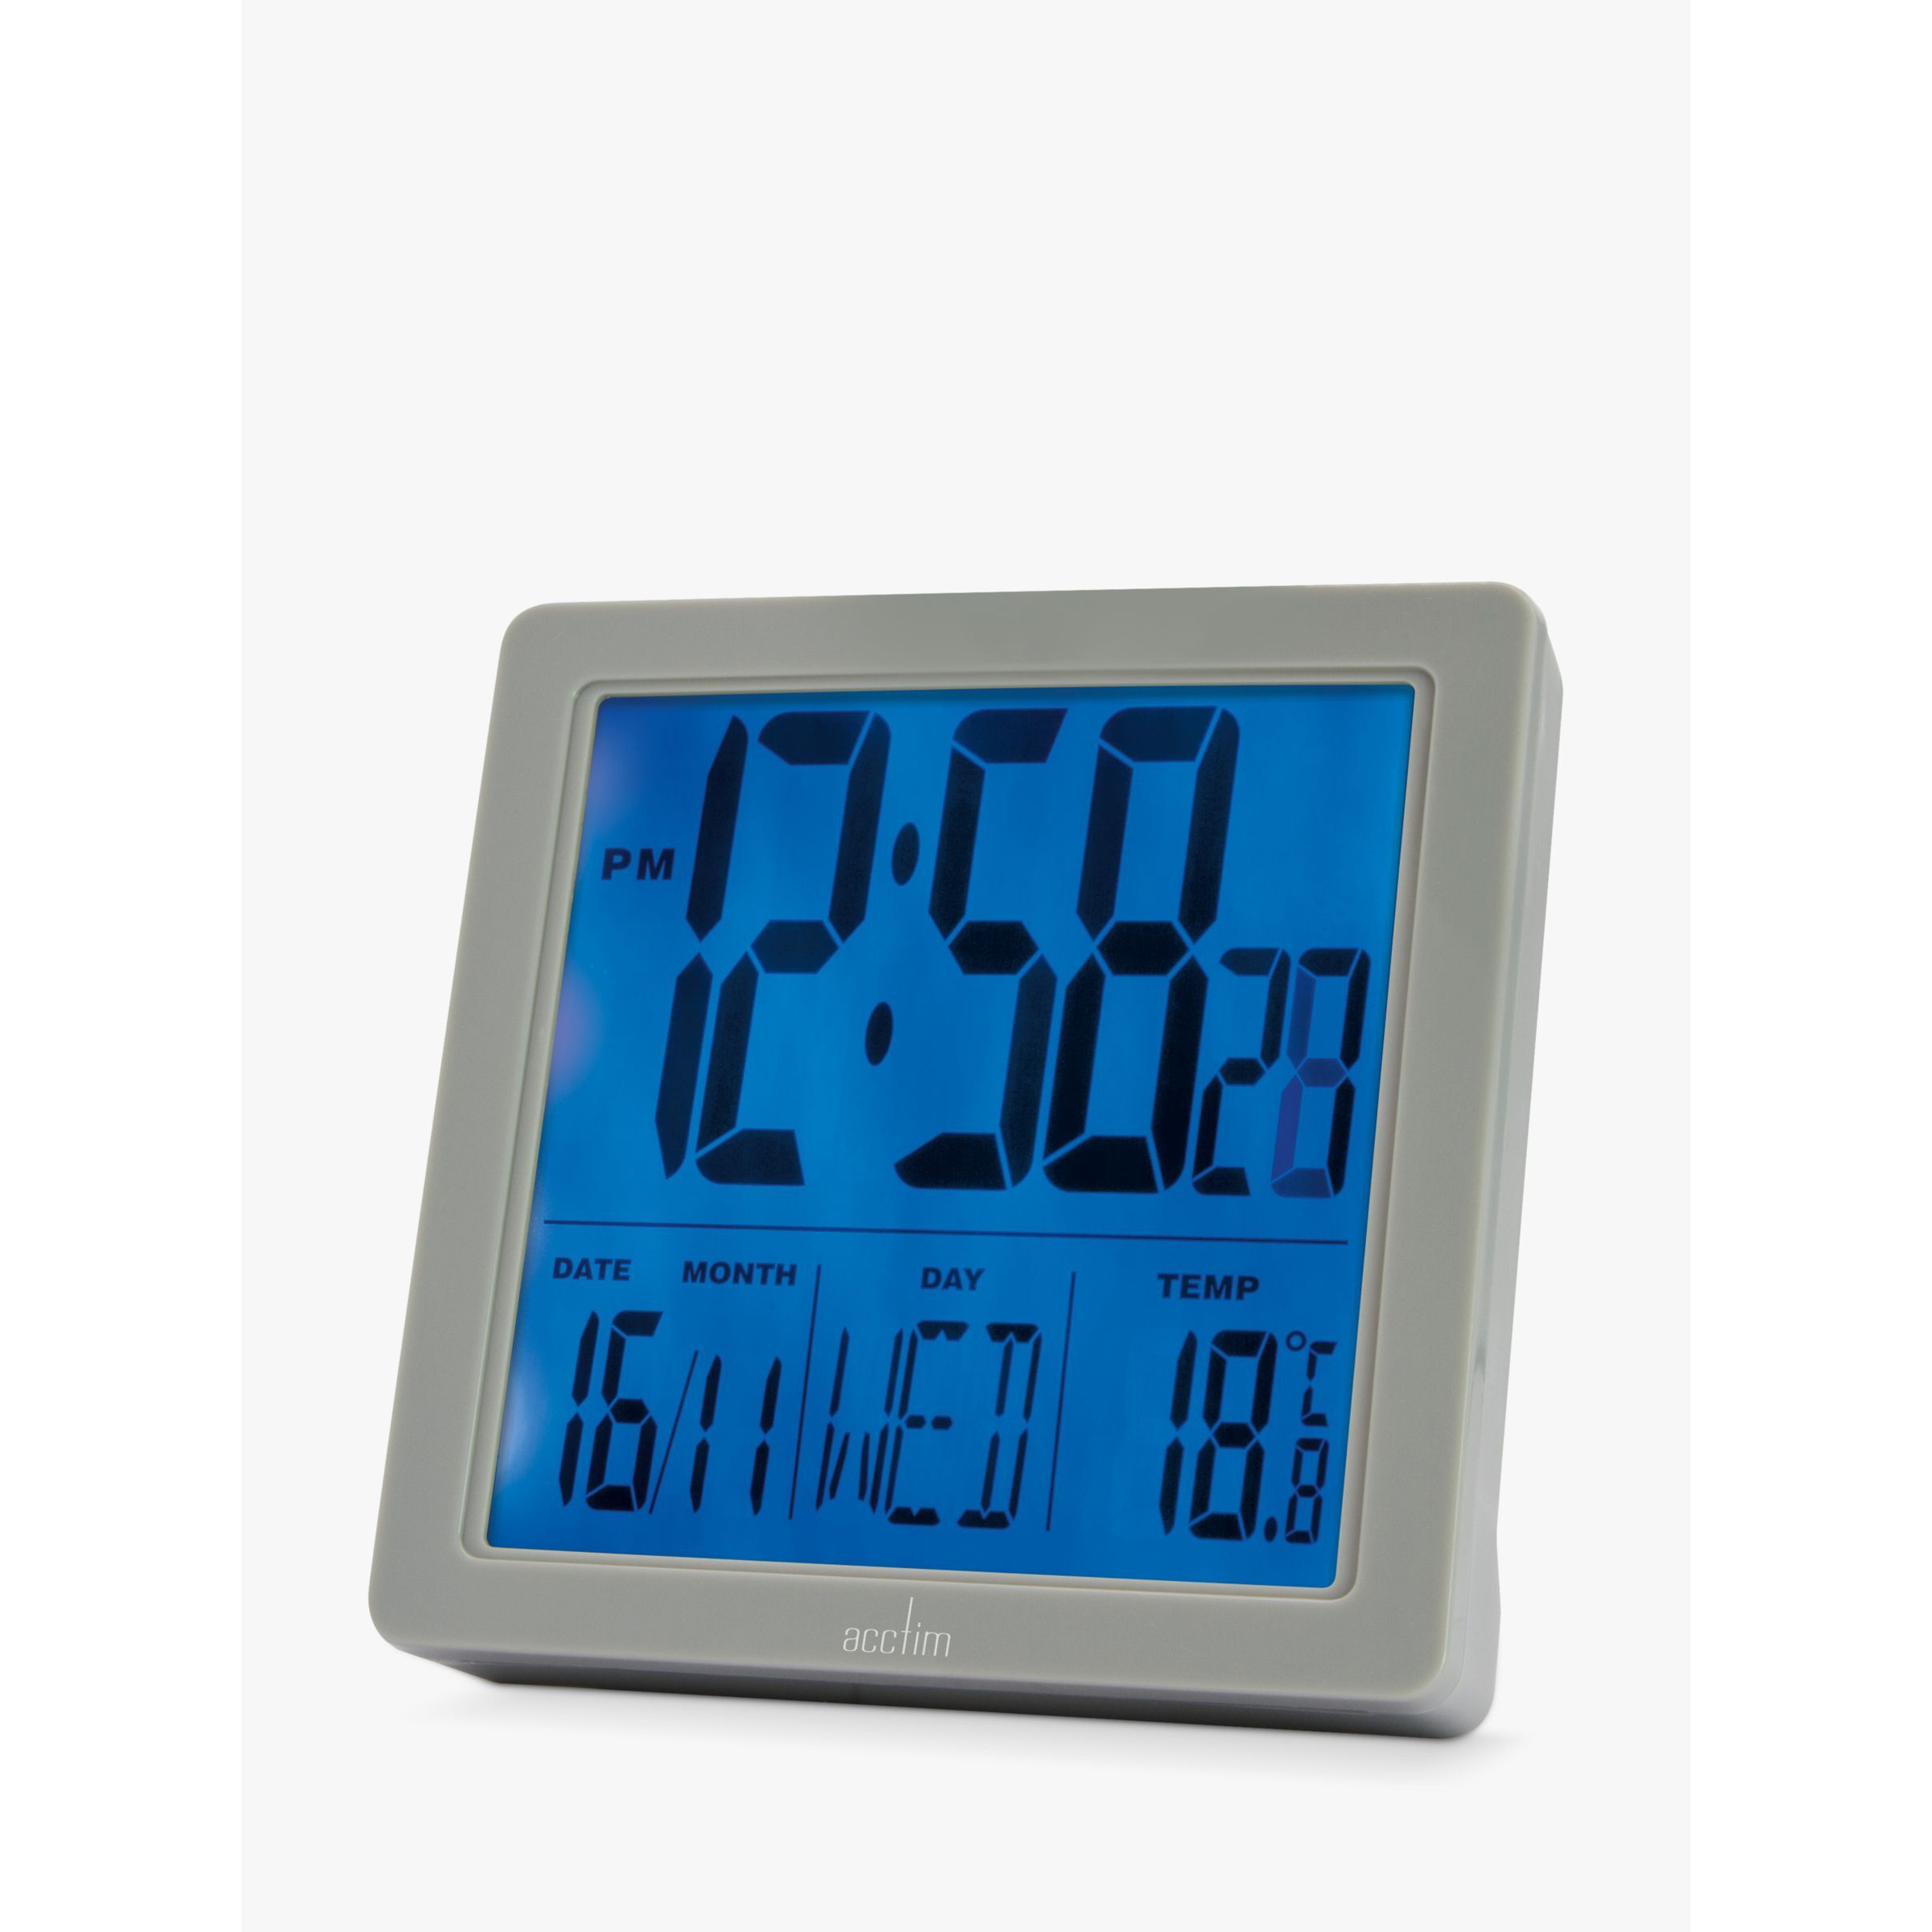 Acctim Axel Radio Controlled Digital LCD Alarm Clock, Grey - image 1